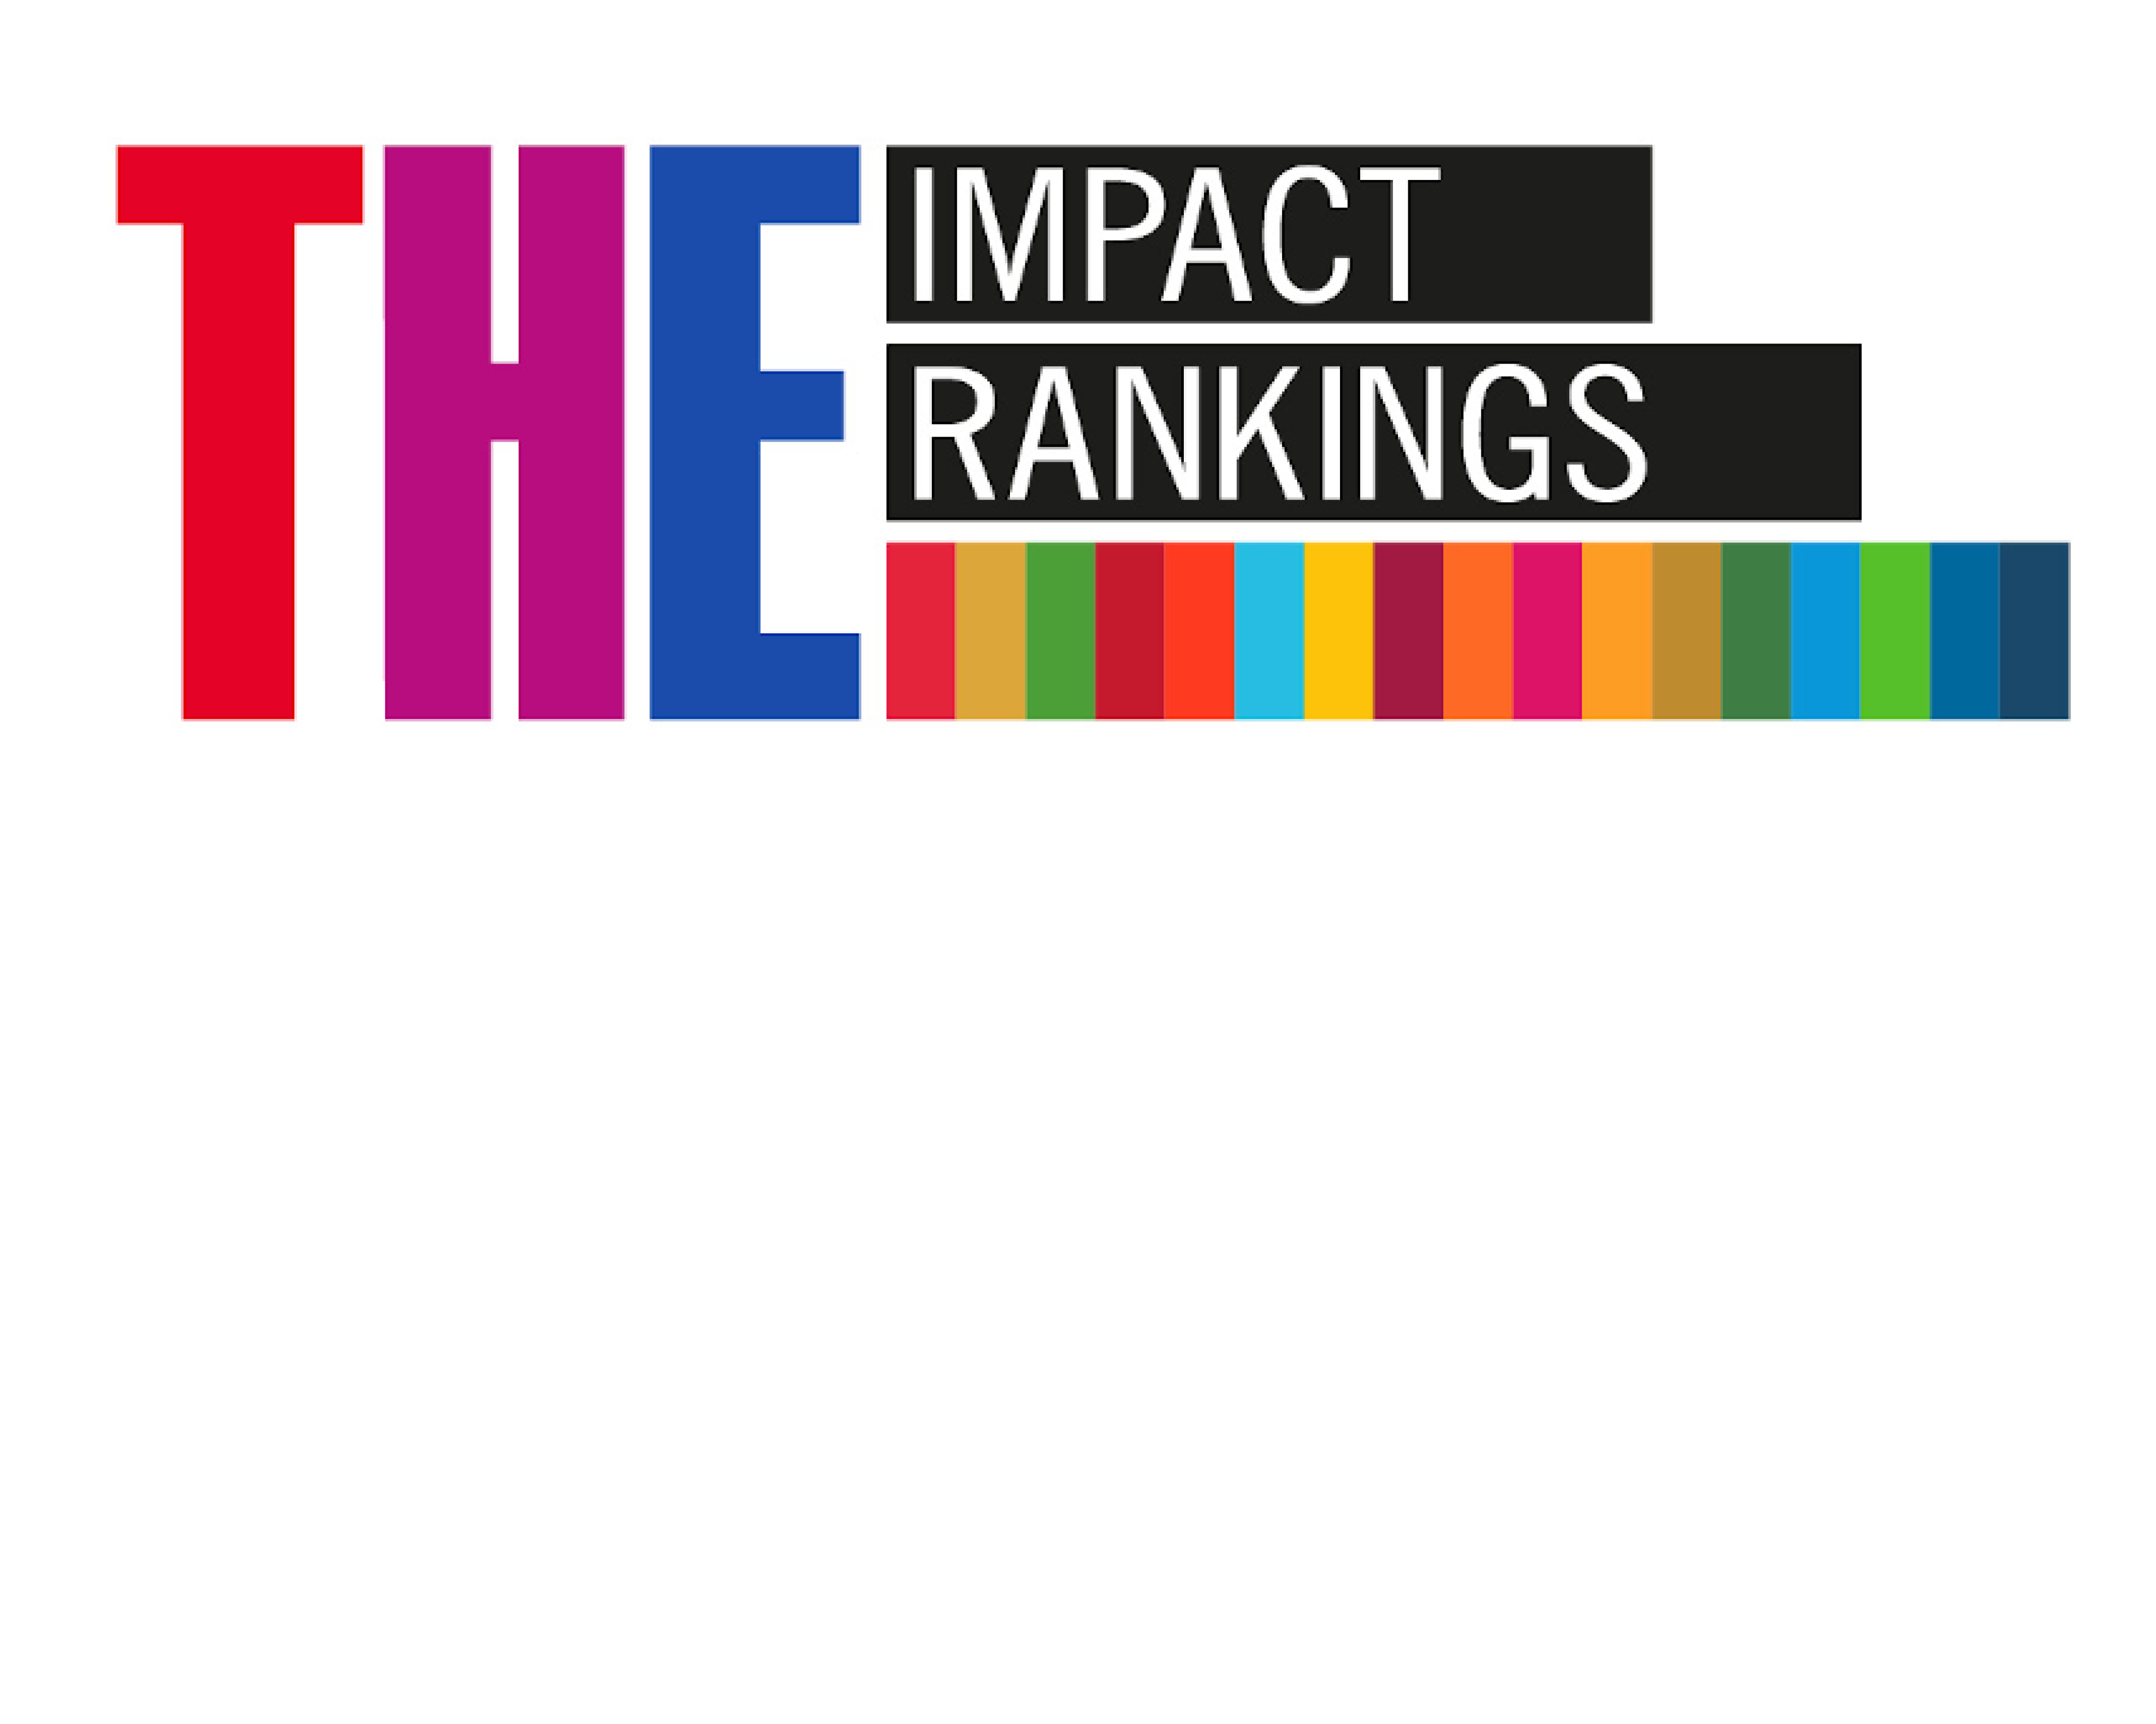 The Impact Rankings